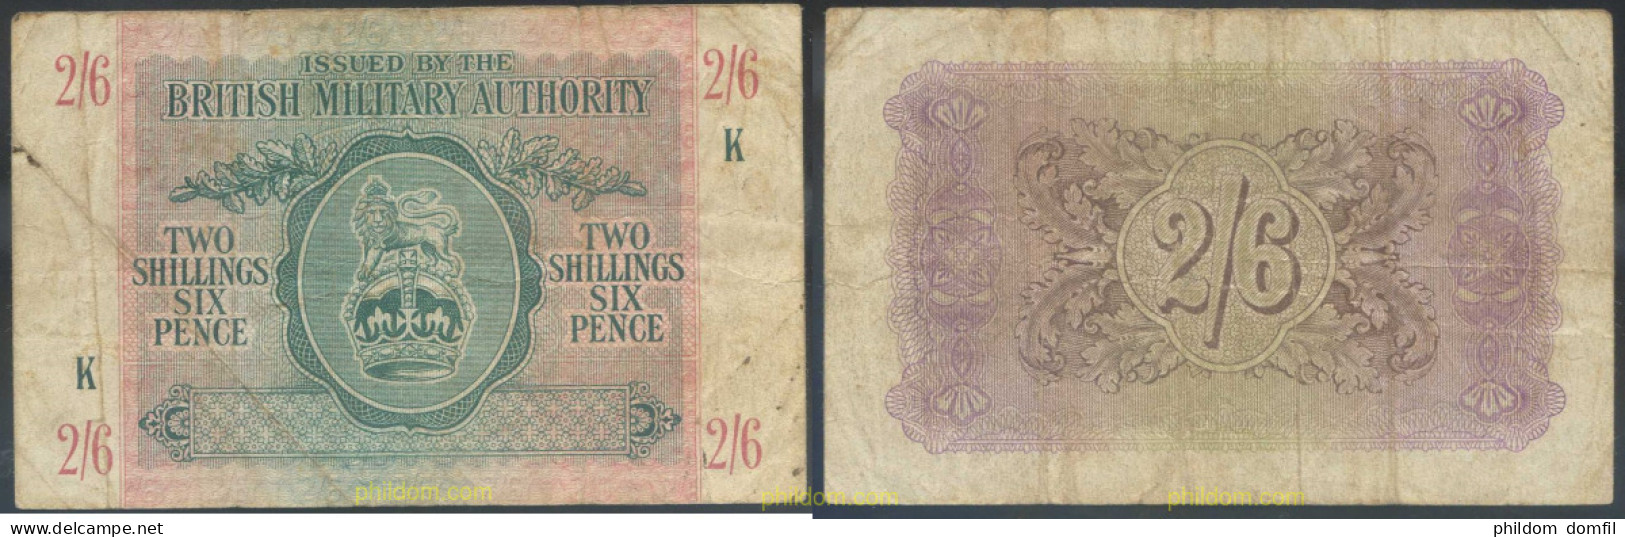 4680 GRAN BRETAÑA 1943 BRITISH MILITARY AUTHORITY 2/6 SHILLING 1943 - Colecciones